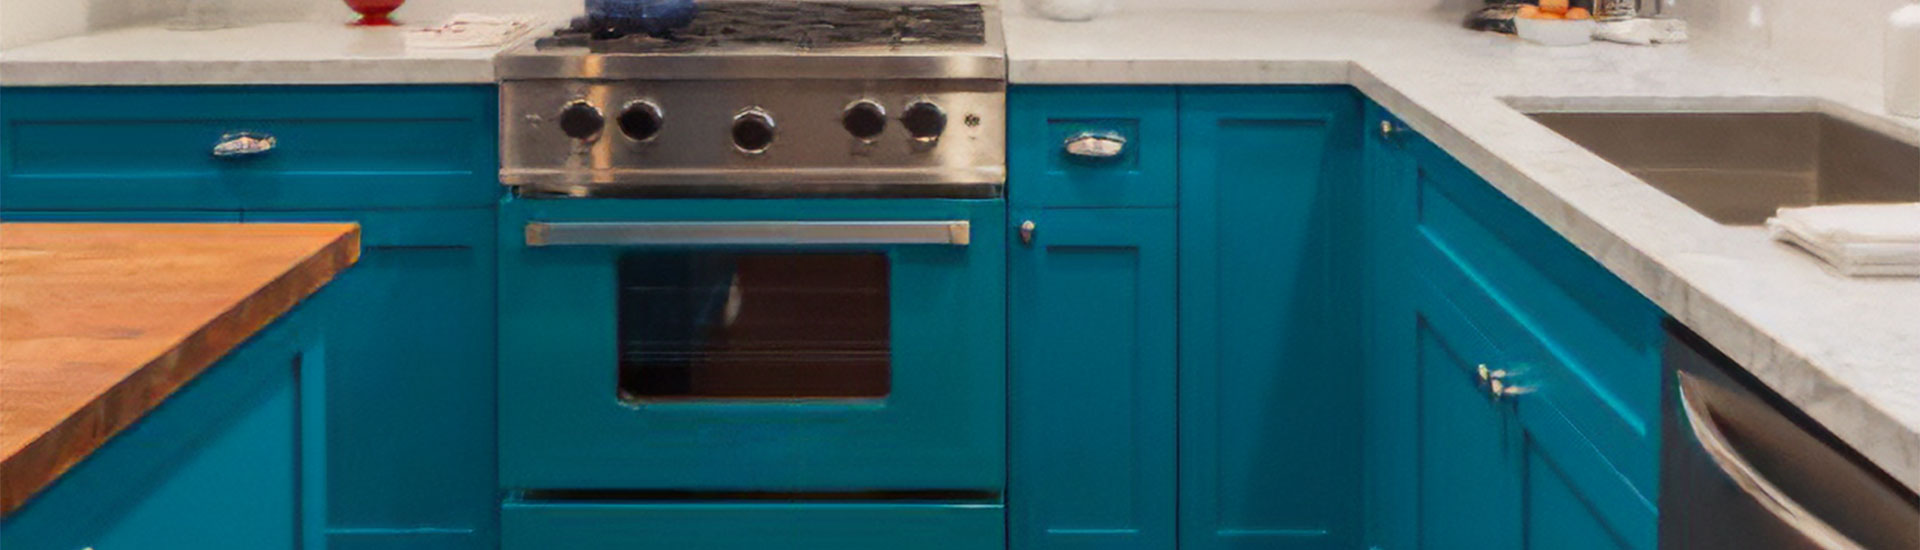 Turquoise Oven Wraps